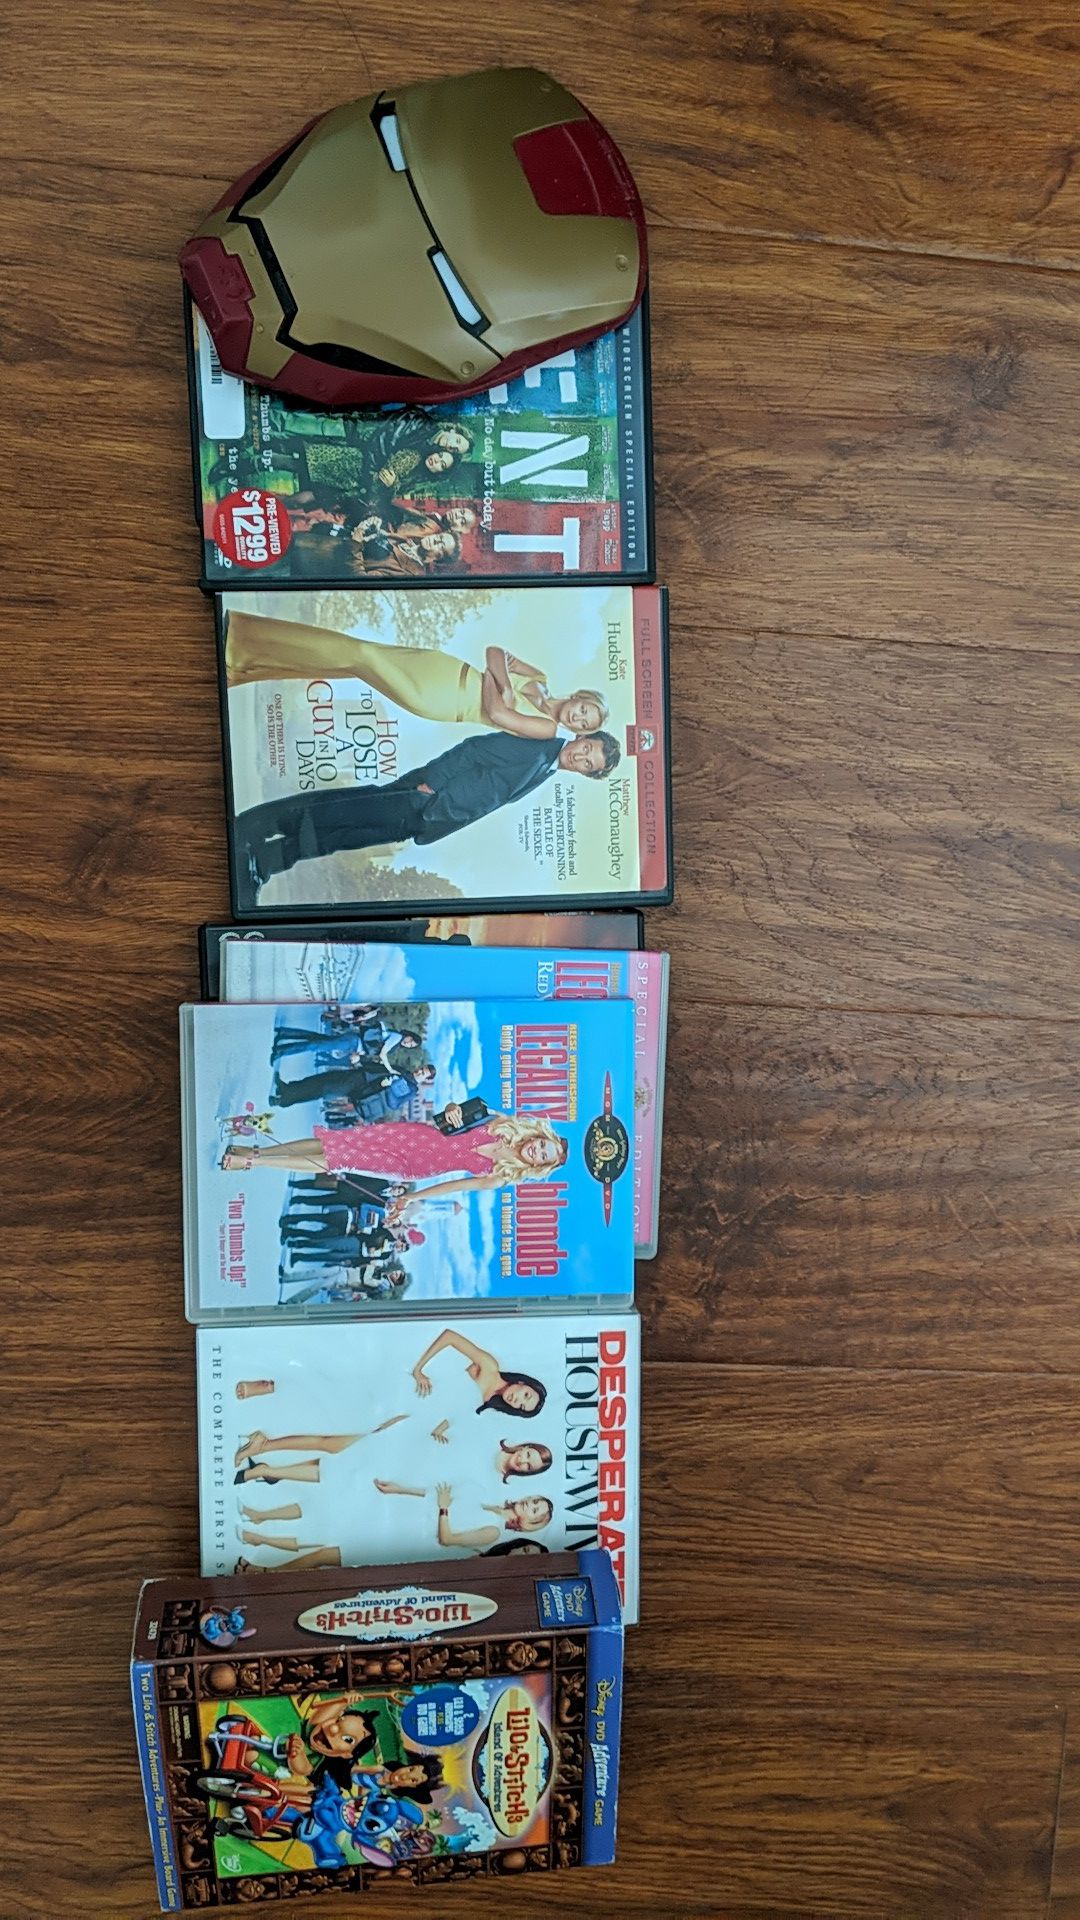 Free bundle of DVDs!